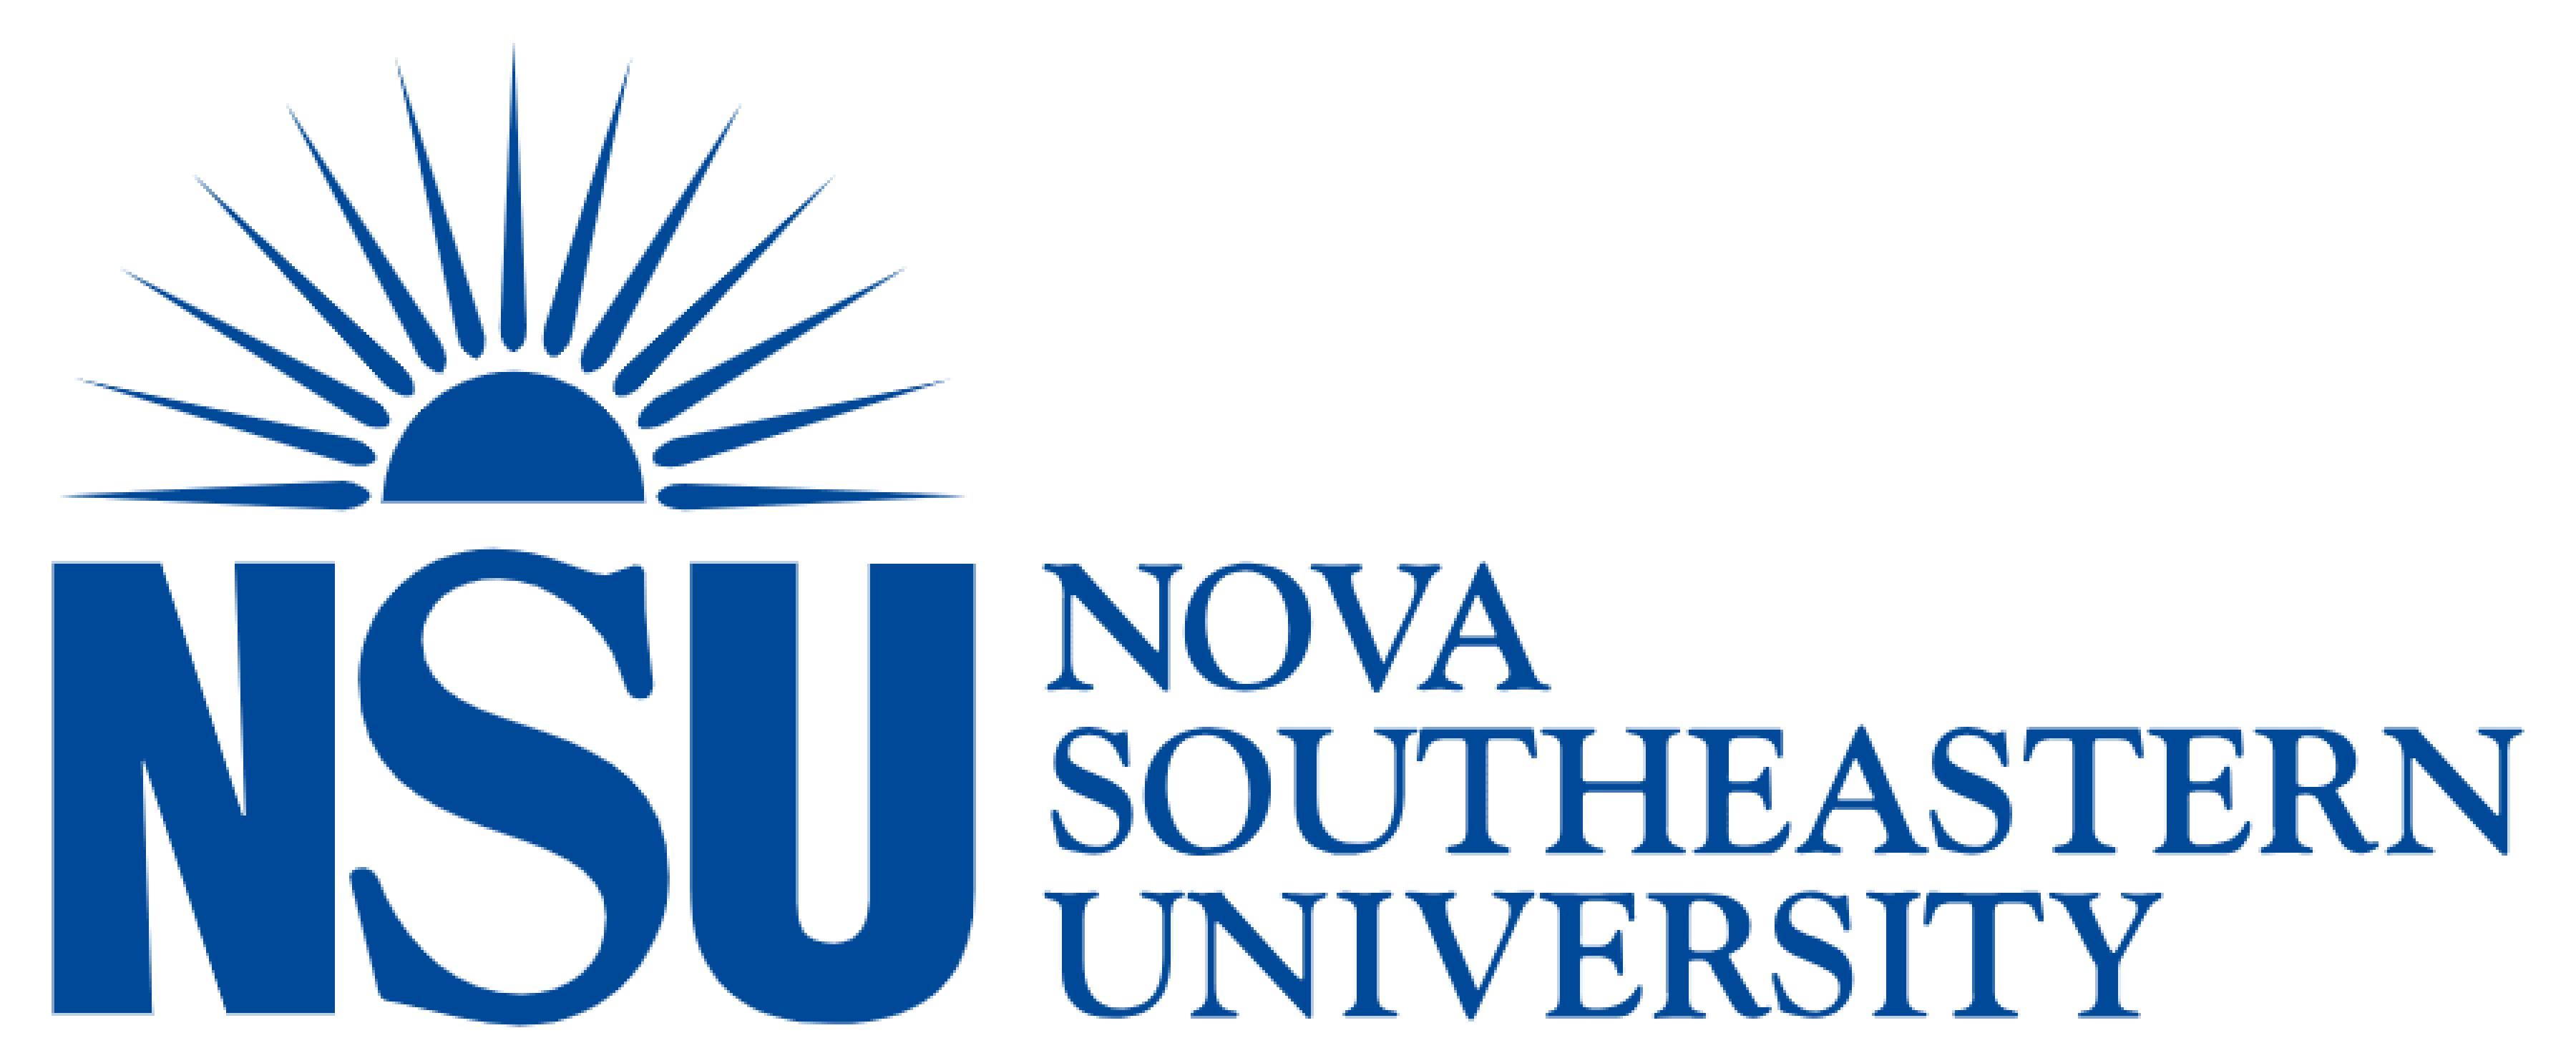 Nova Southeastern University лого